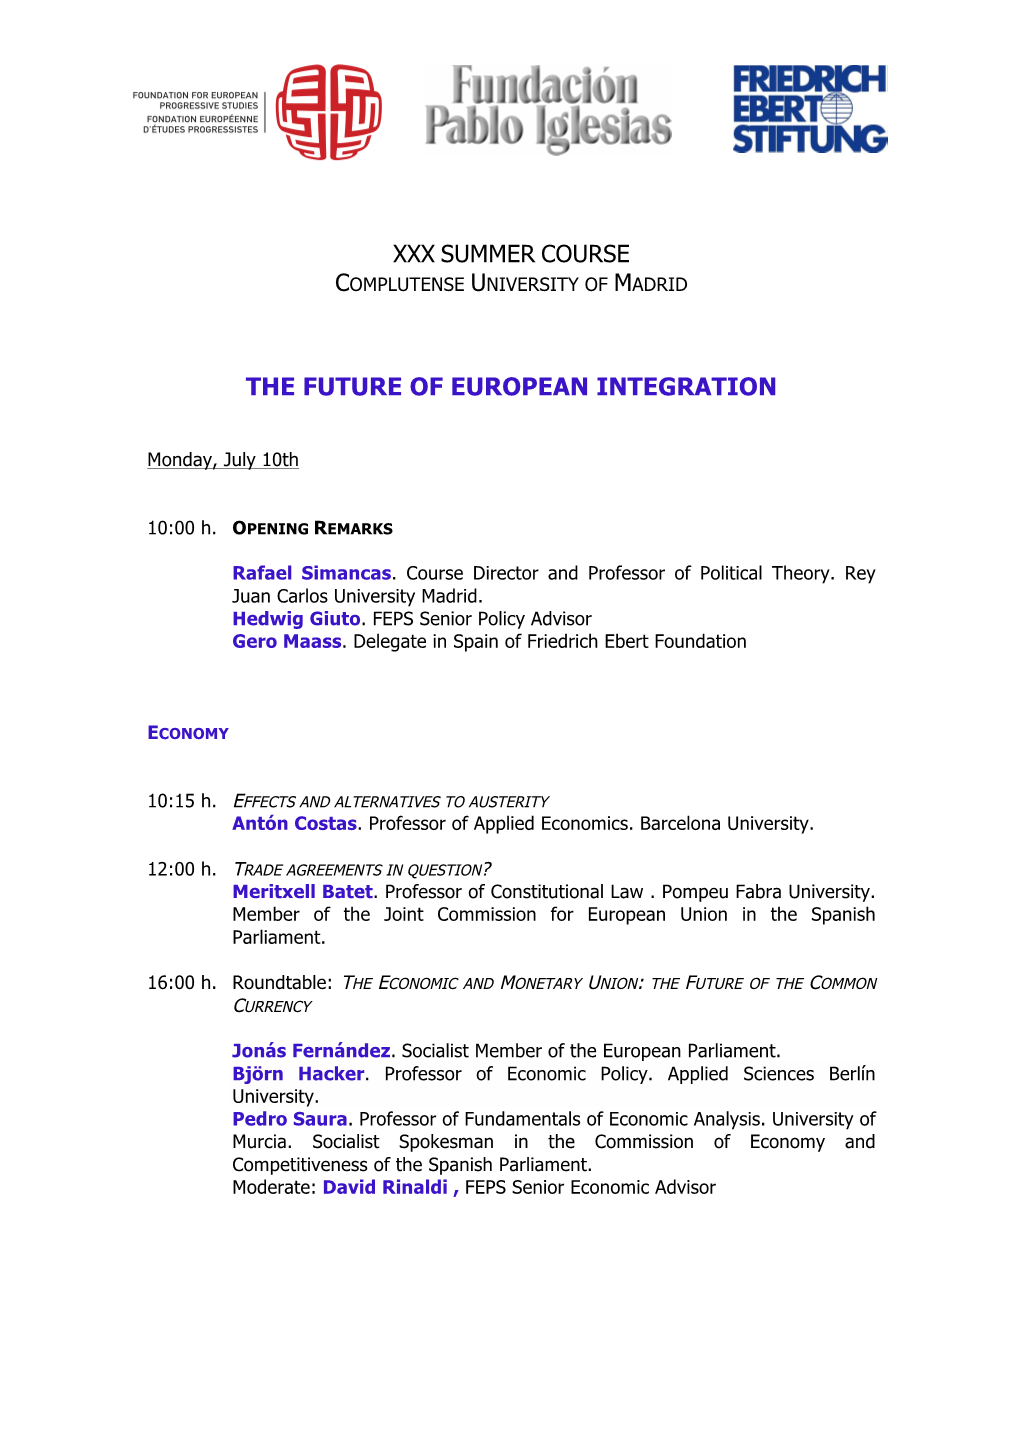 The Future of European Integration